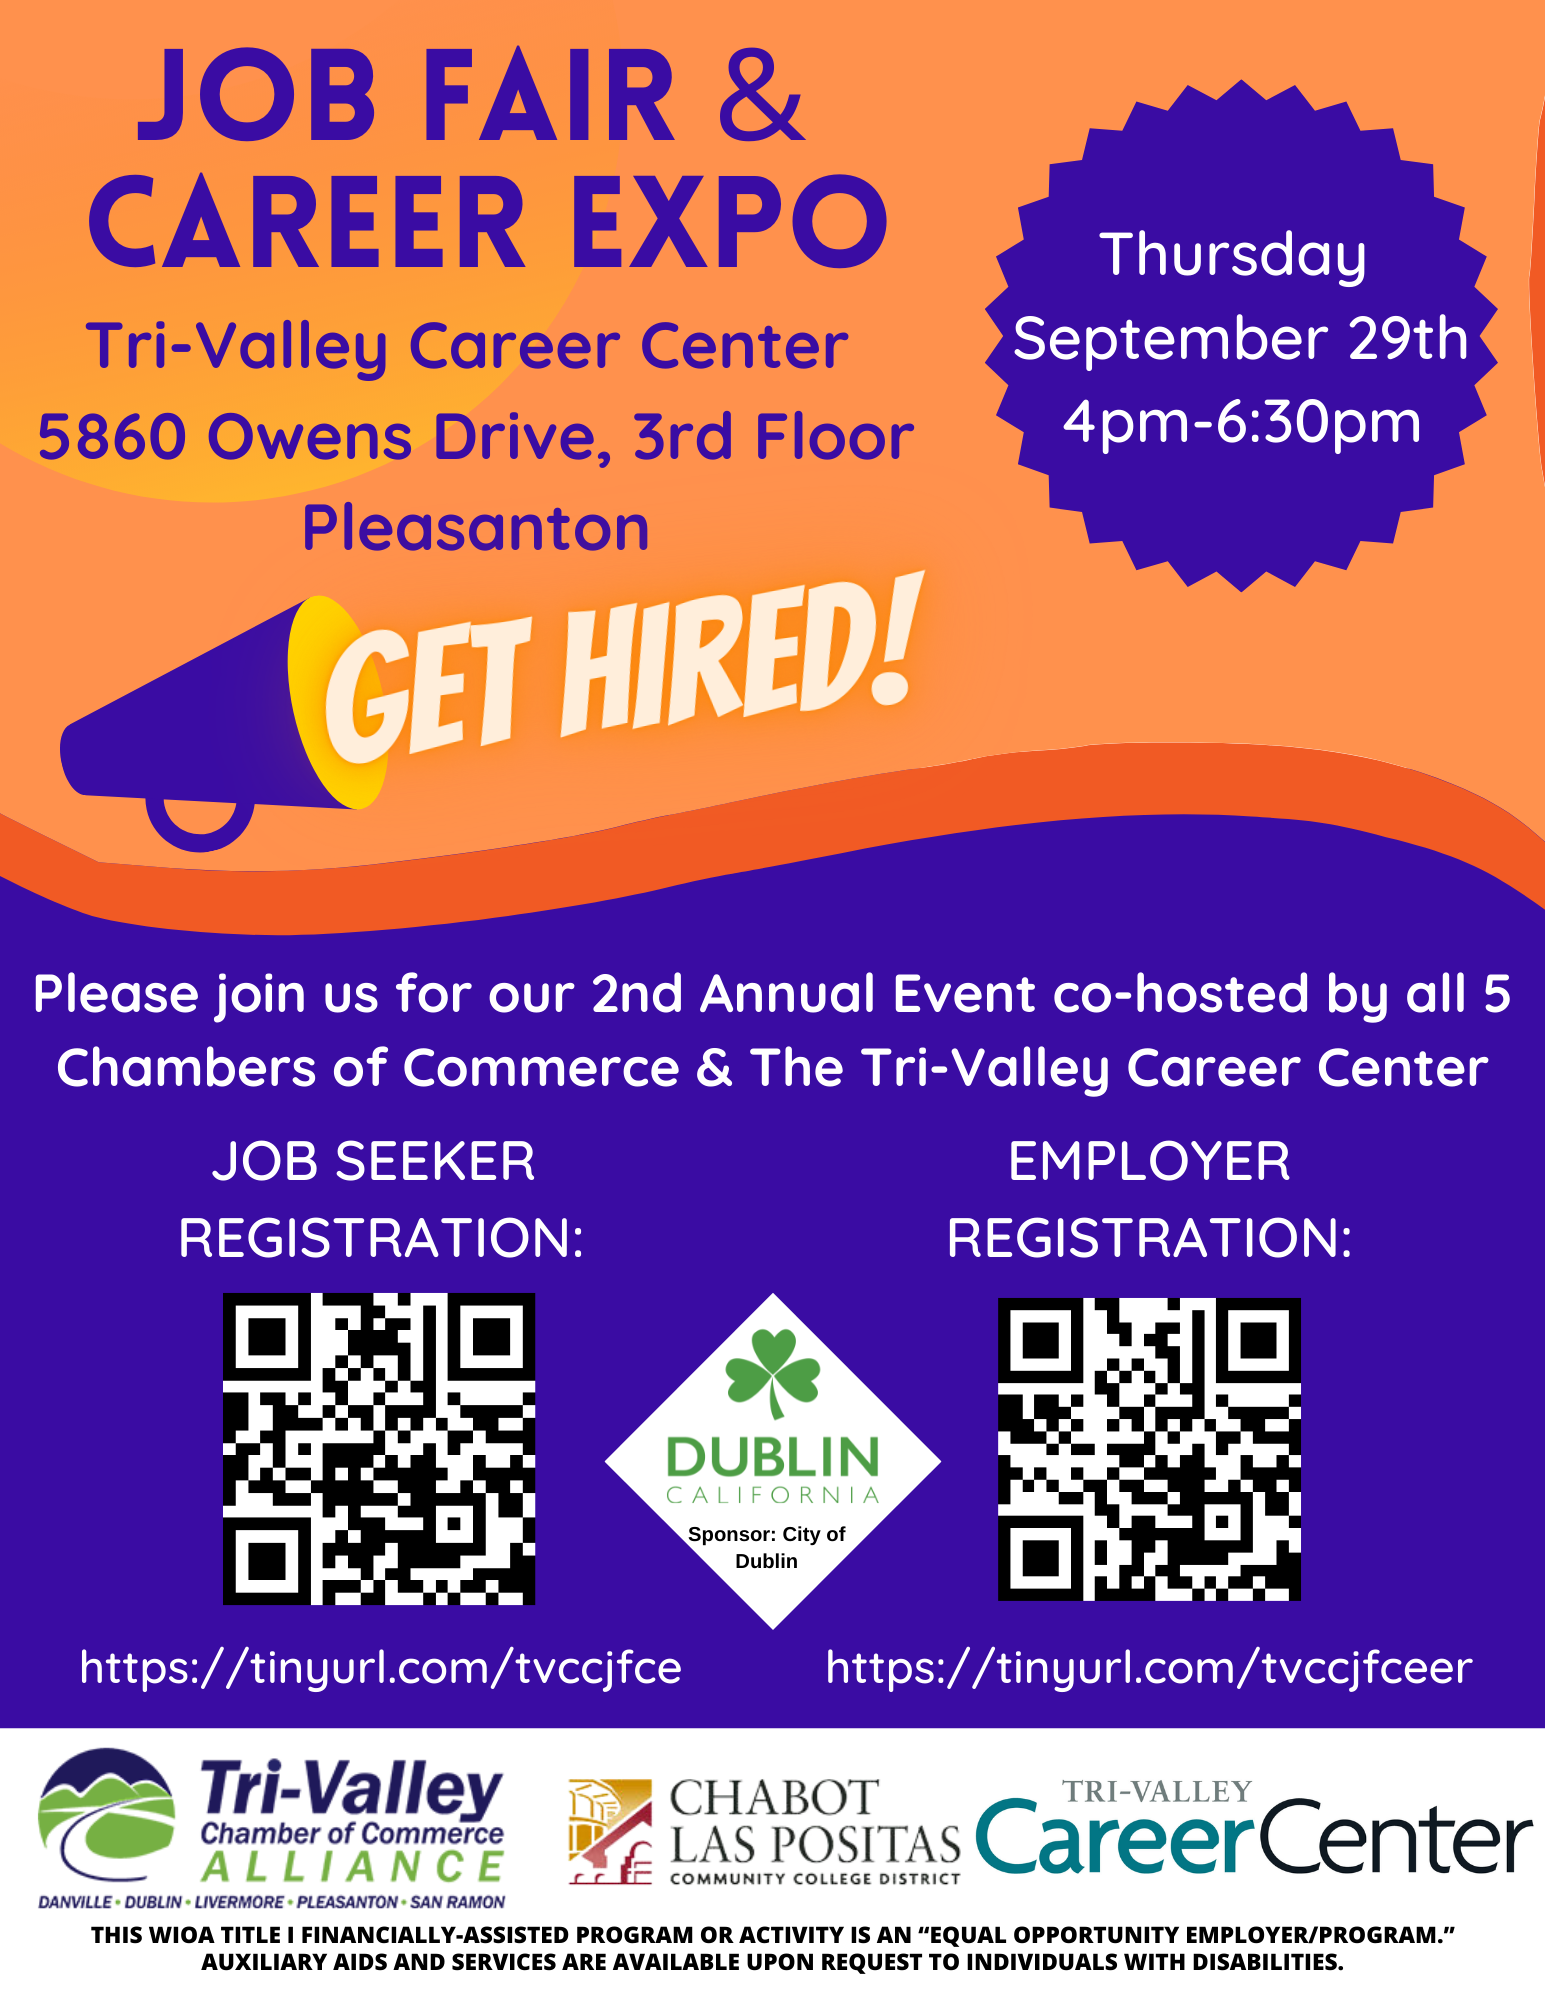 Job Fair and Career Expo at Tri-Valley Career Center in Pleasanton, September 29, 4:00-6:30 p.m.